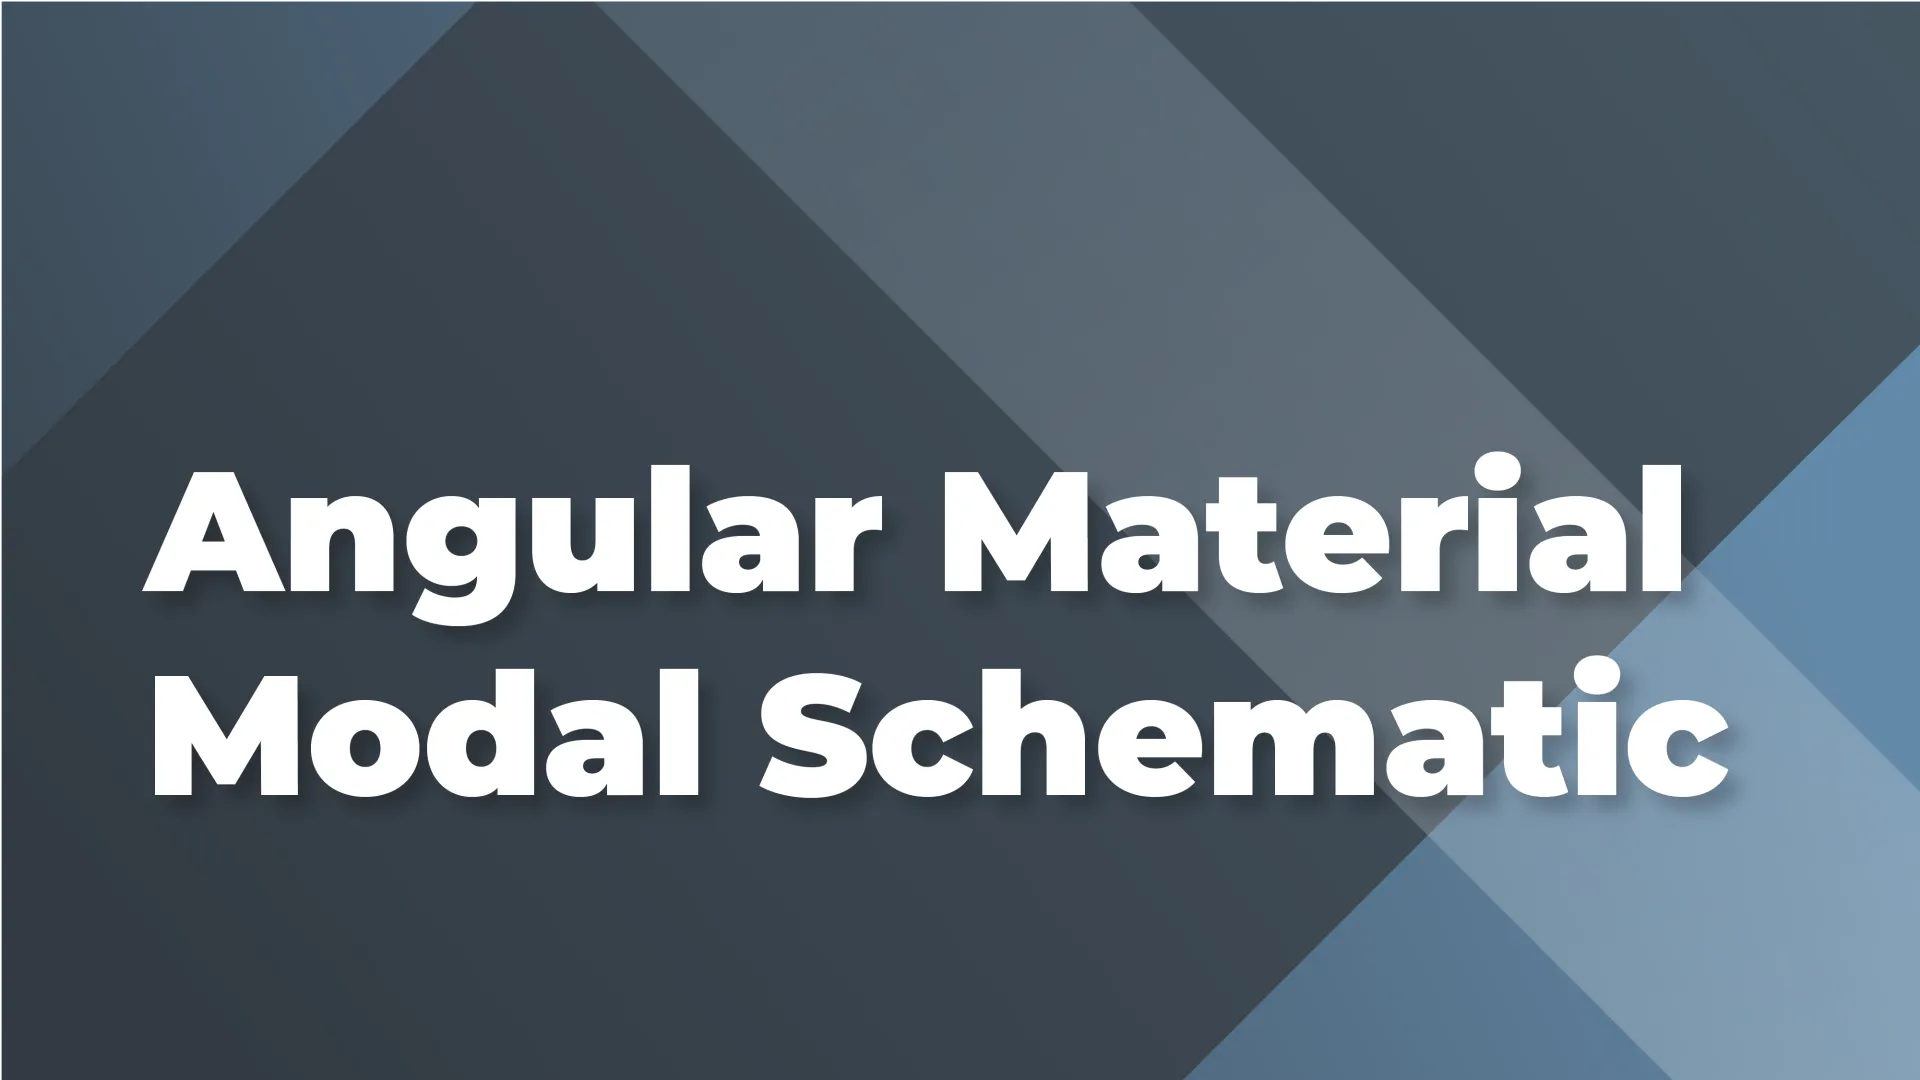 Angular Material Modal Schematic